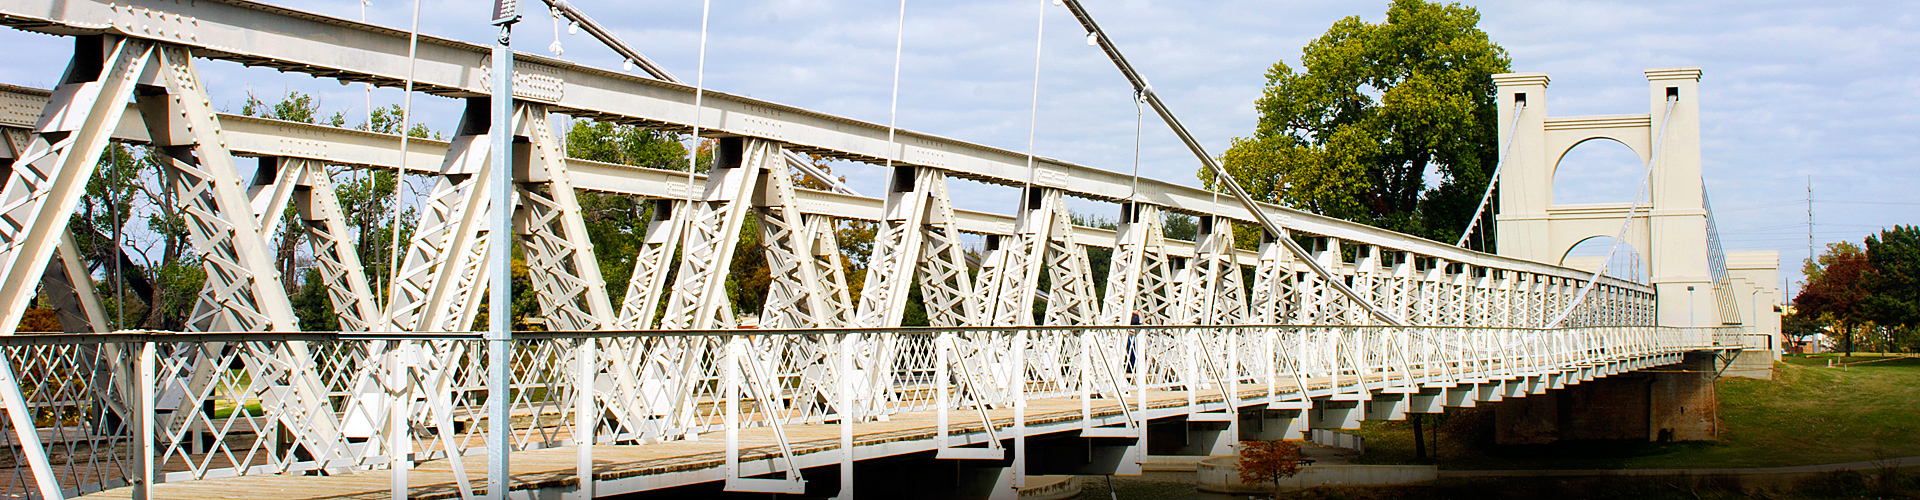 Washington-Bridge-Waco3